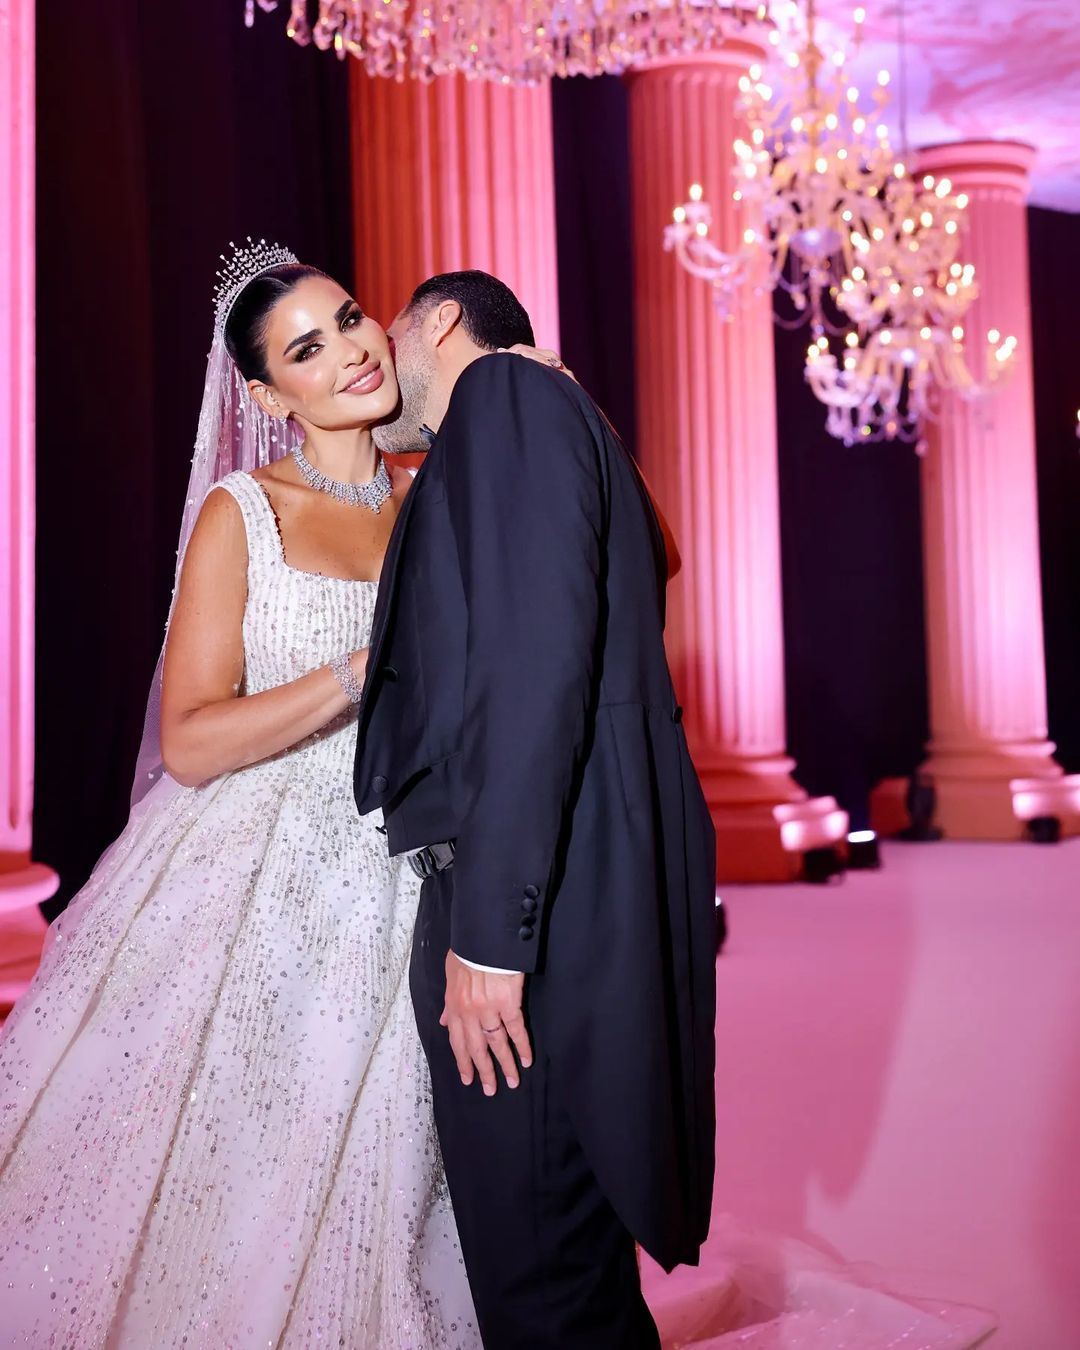 Photos ... Natalie Basma and Hassan Abdallah Wedding Details